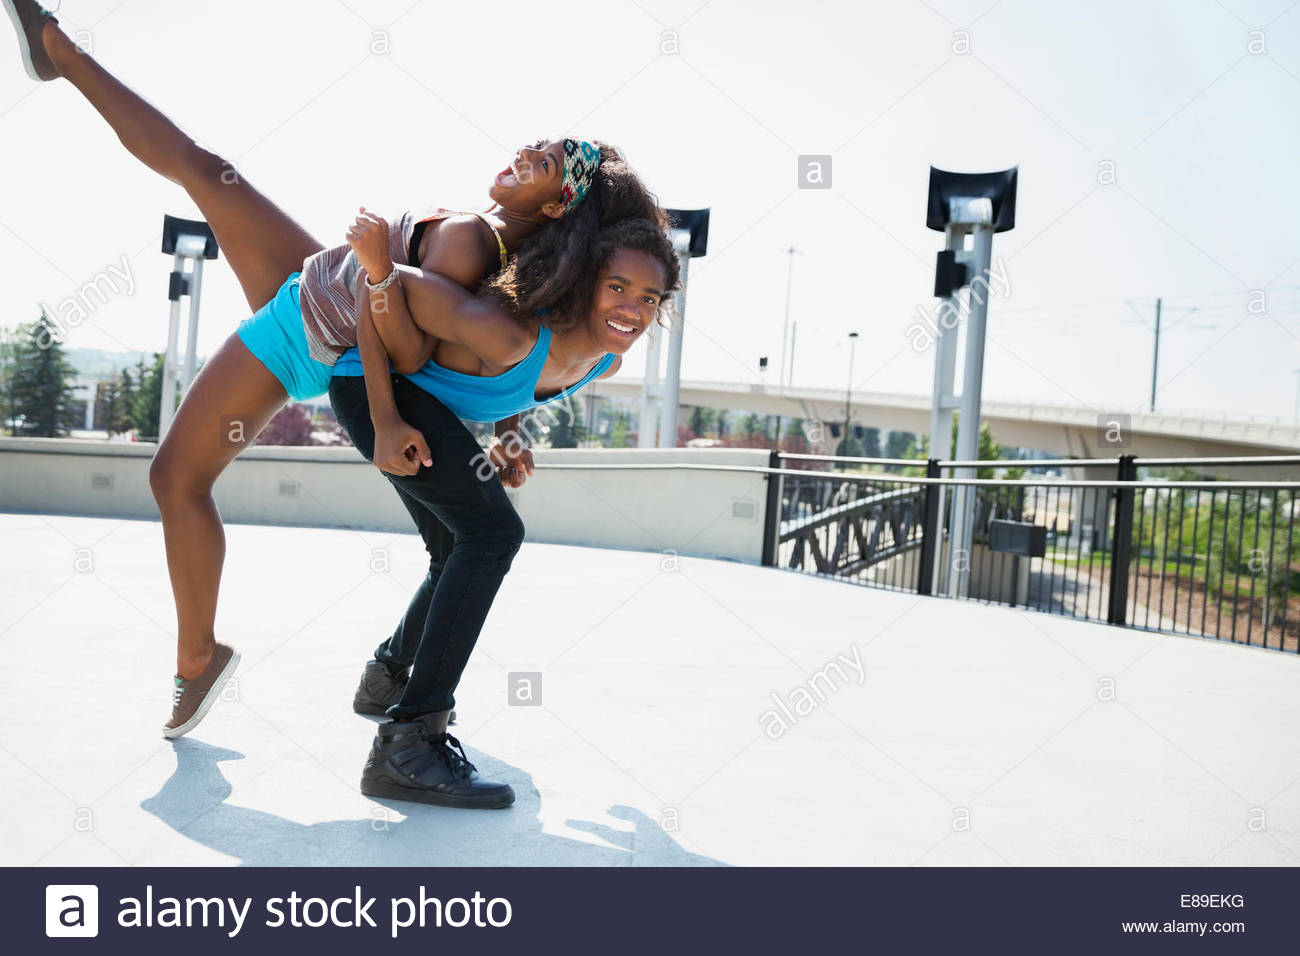 Teenage couple playing outdoors Stock Photo